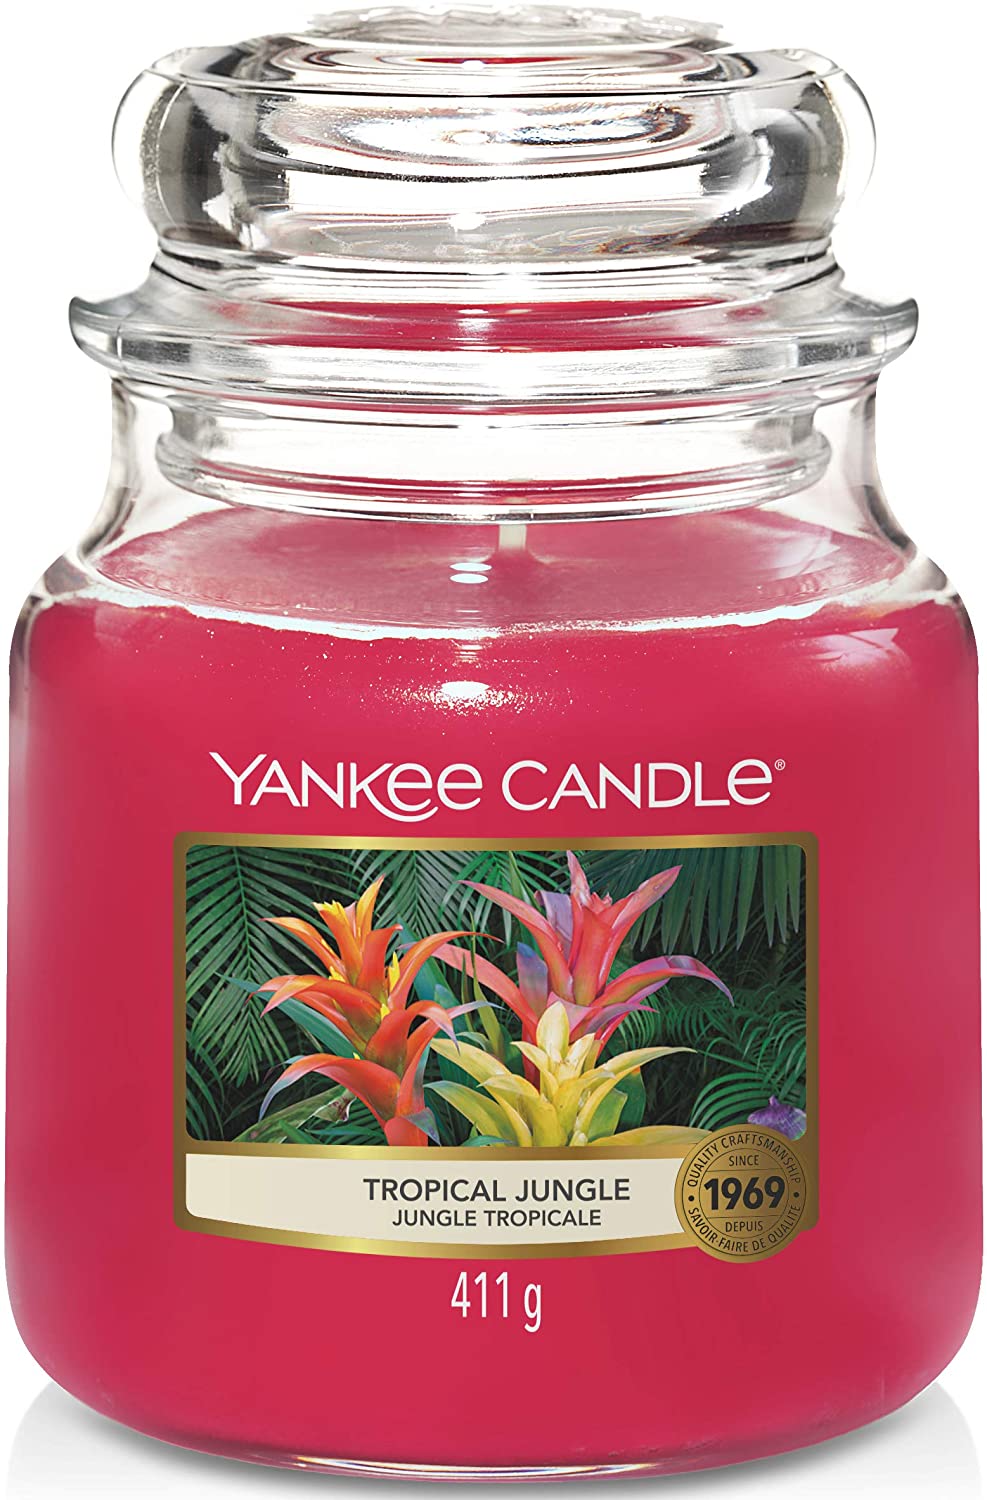 Yankee Candle Jar